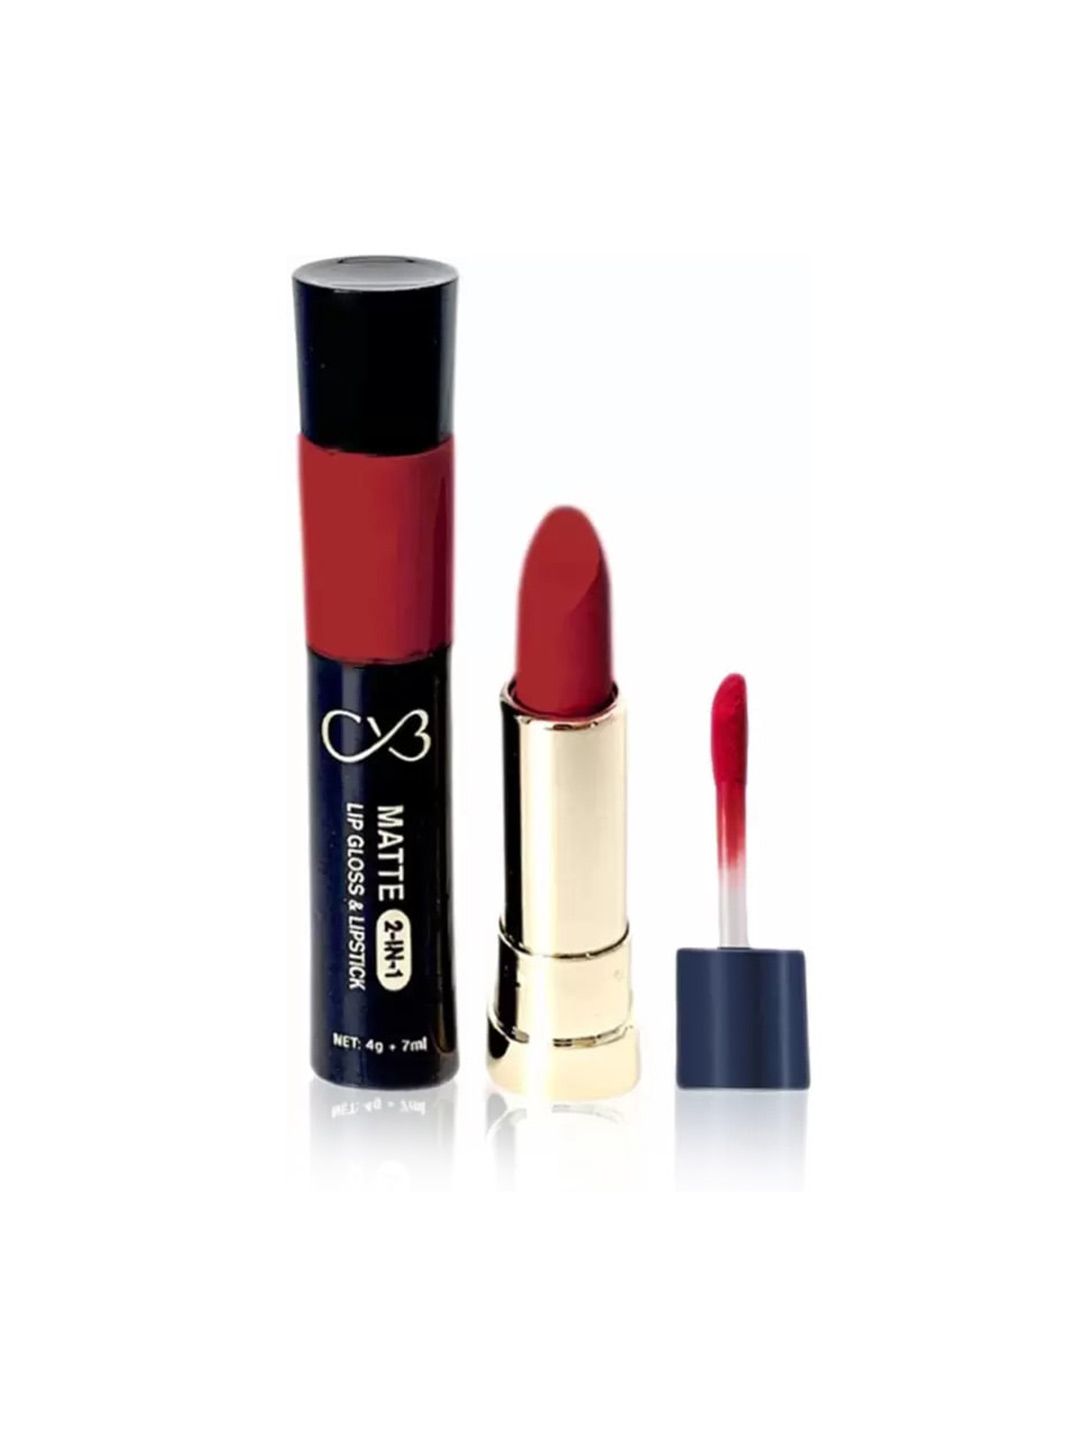 CVB Matte 2-In-1 Lip Gloss & Velvet Lipstick - Opera Price in India